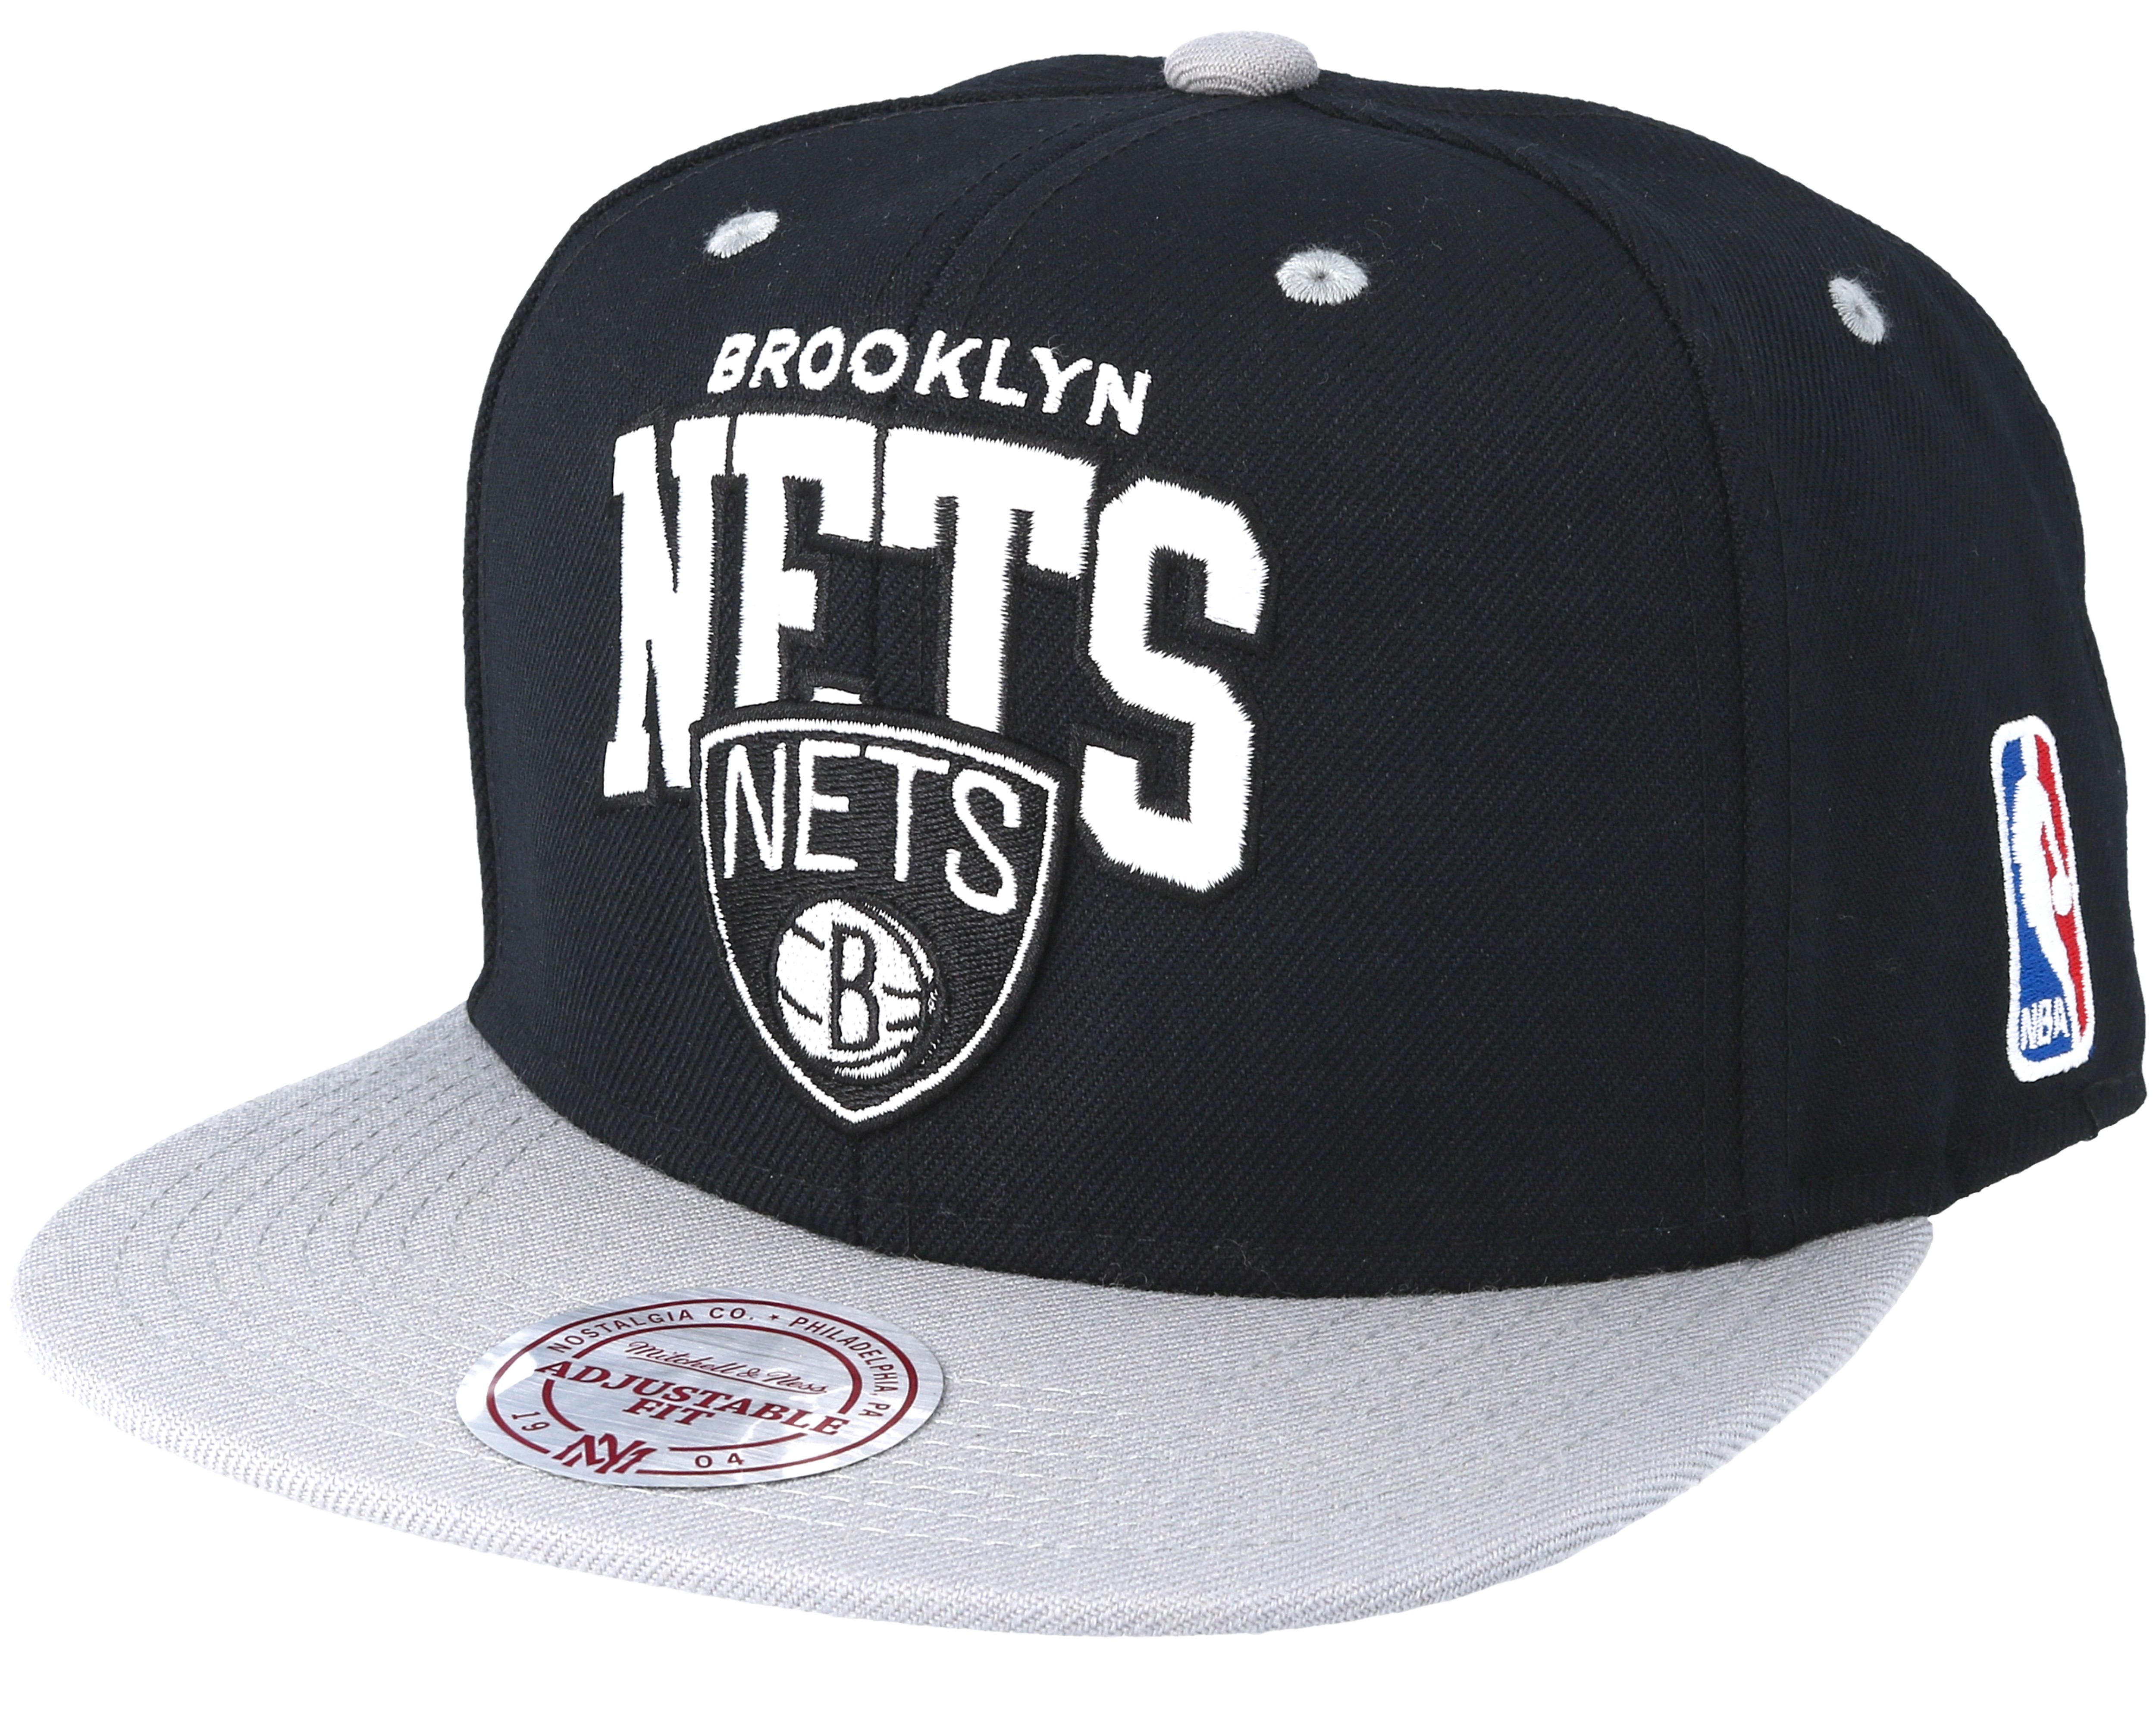 Hat shop. Brooklyn nets cap. Кепка Brooklyn NYC серая. Brooklyn nets NUARC Snapback бейсболка Mitchell & Ness арт. Eu085. New era Brooklyn nets.